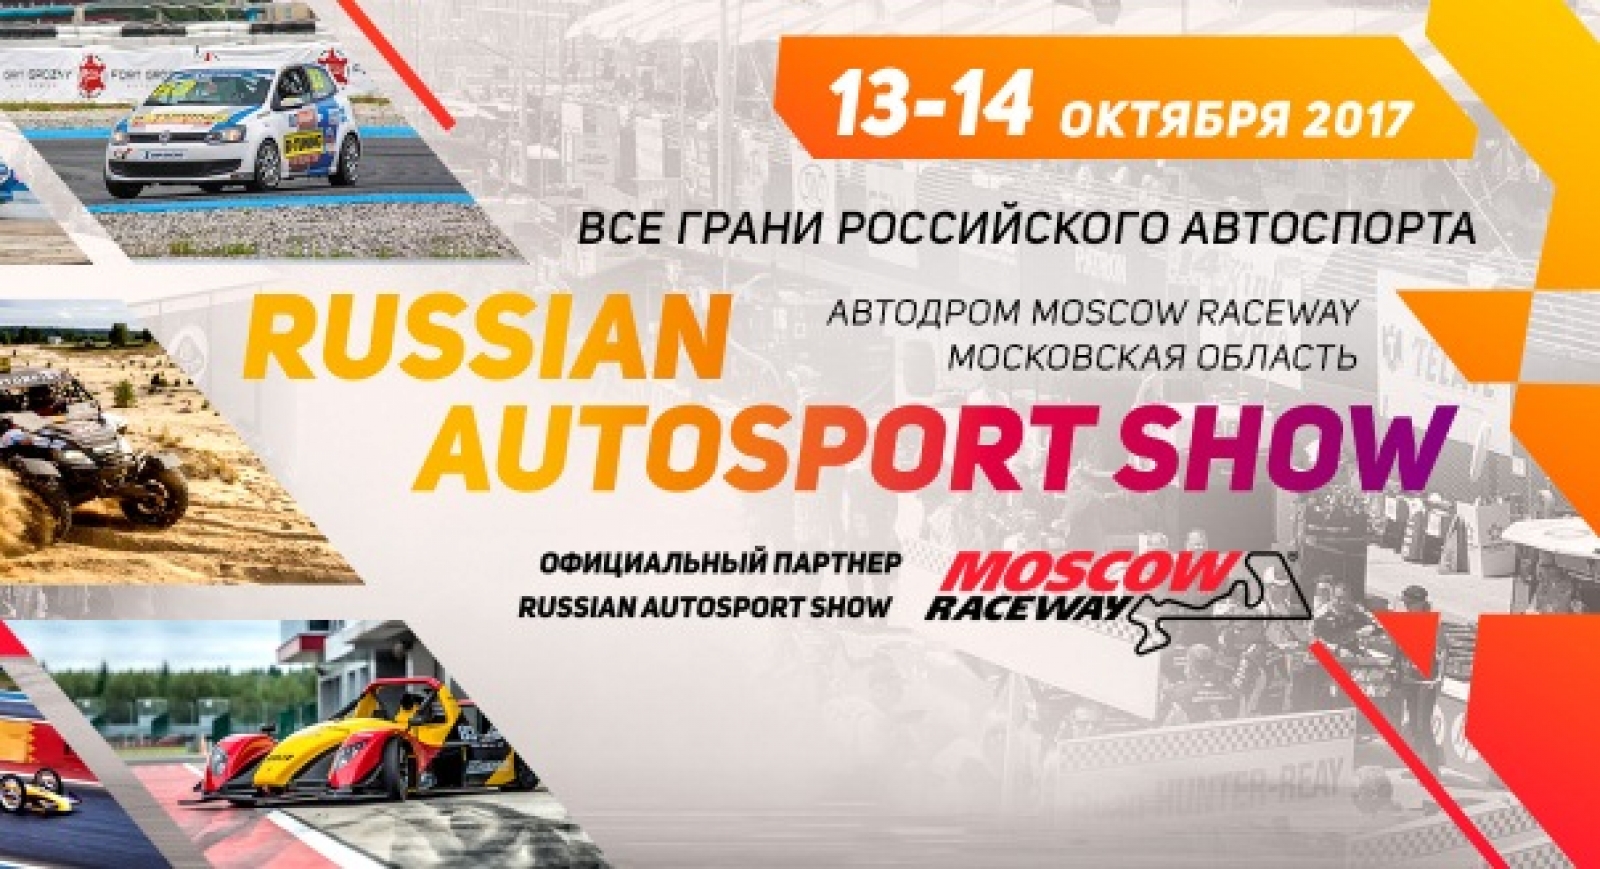 Russian Autosport Show: уже скоро!